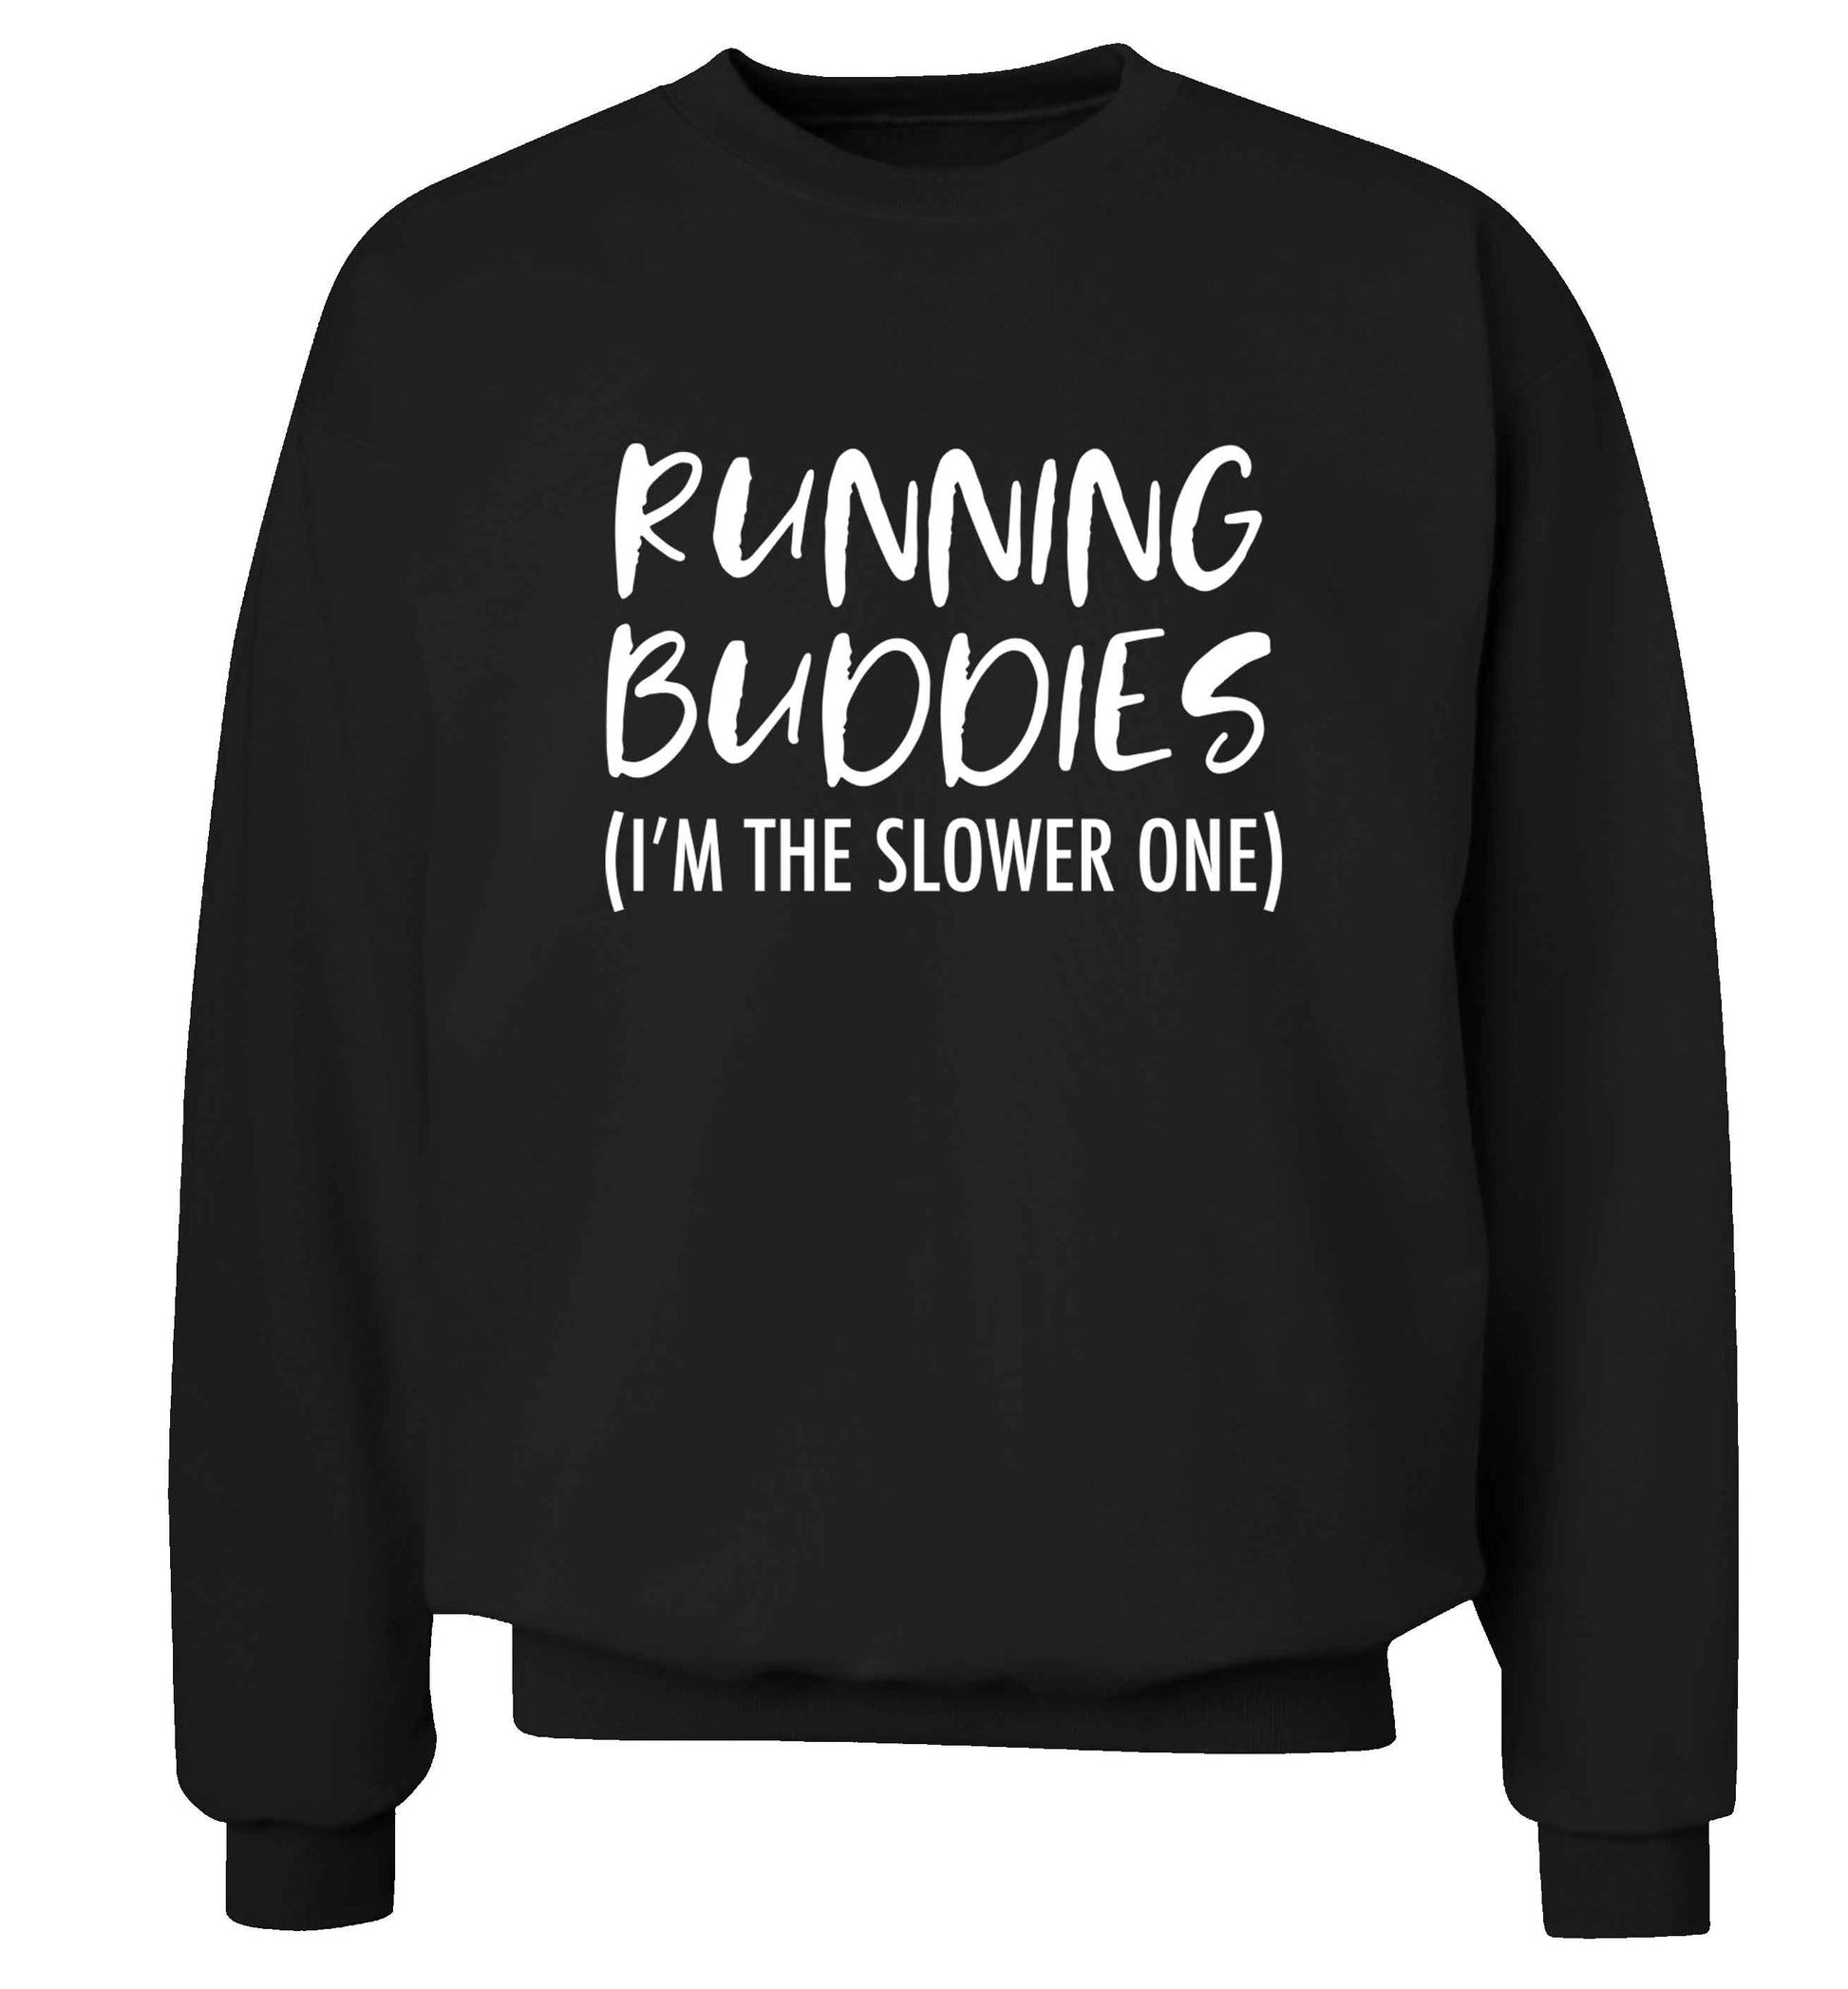 Running buddies (I'm the slower one) adult's unisex black sweater 2XL